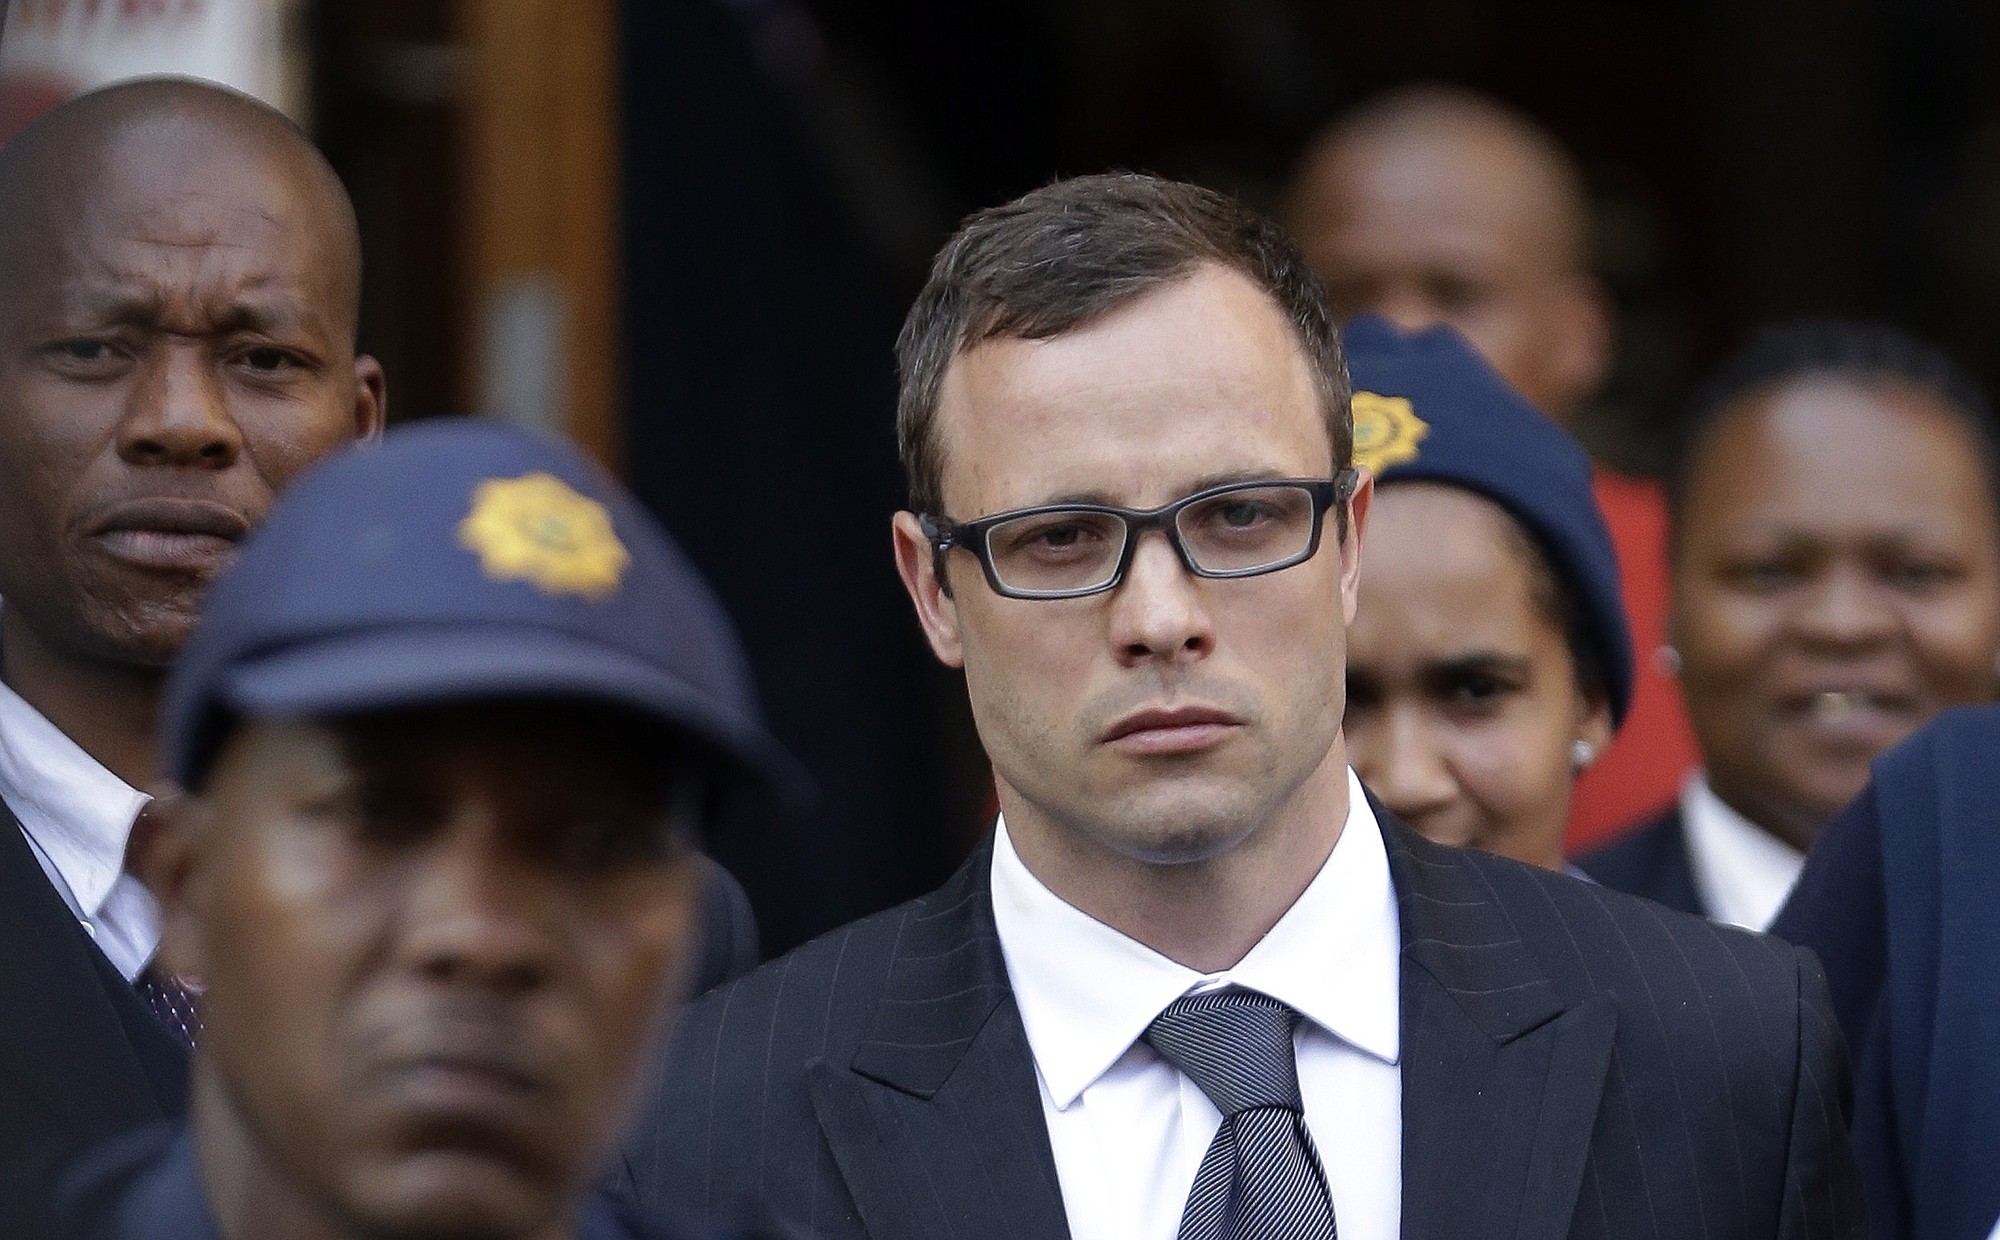 Oscar Pistorius, center, leaves the high court in Pretoria, South Africa, on Thursday.